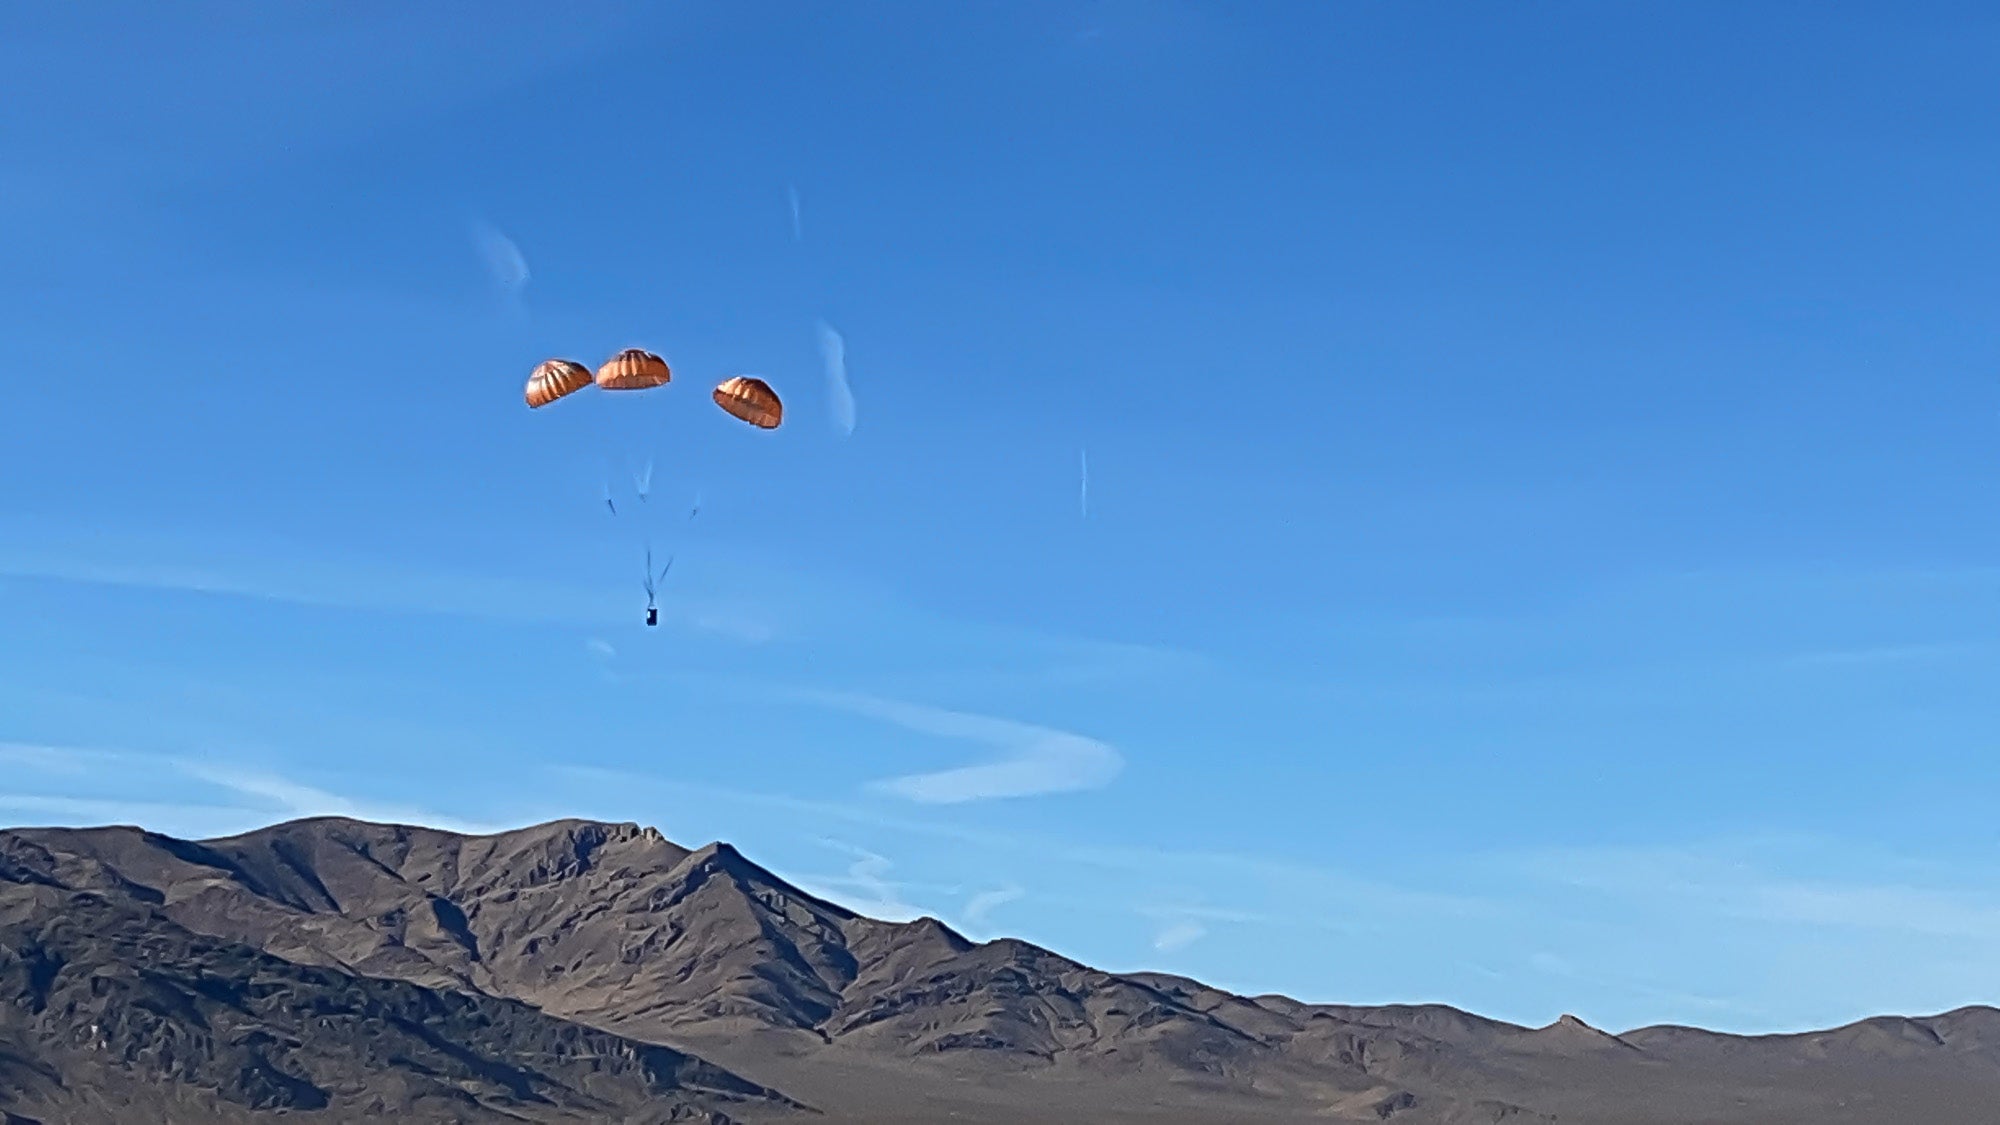 ARS testing equipment descends via parachute